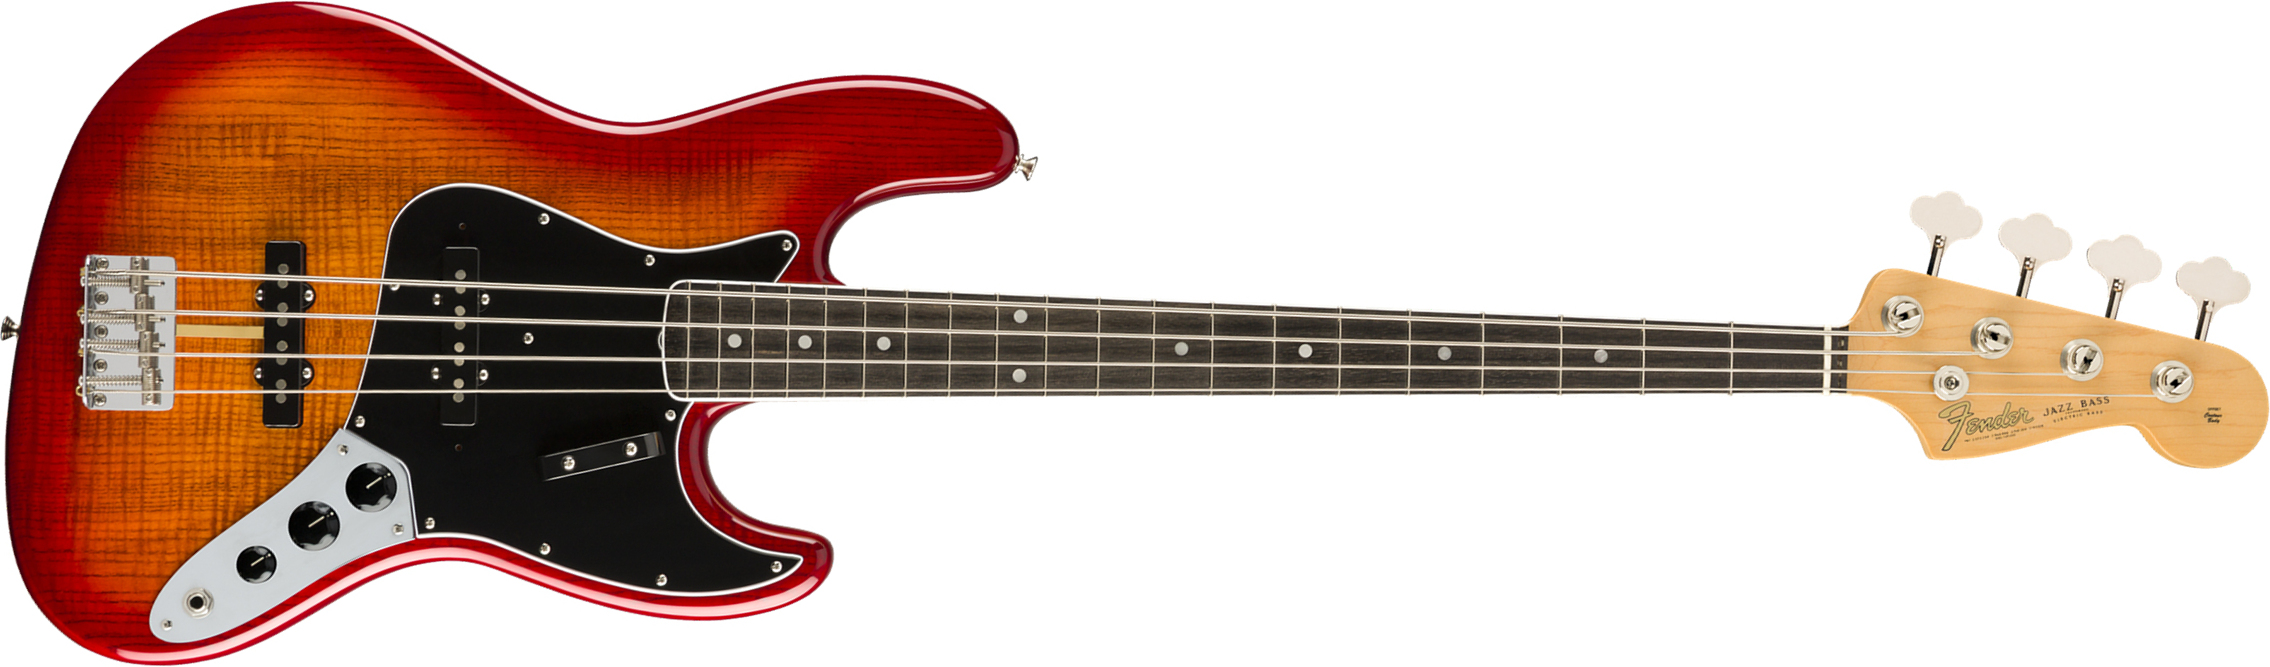 Fender Jazz Bass Flame Ash Top Rarities Usa Eb - Plasma Red Burst - Solid body elektrische bas - Main picture